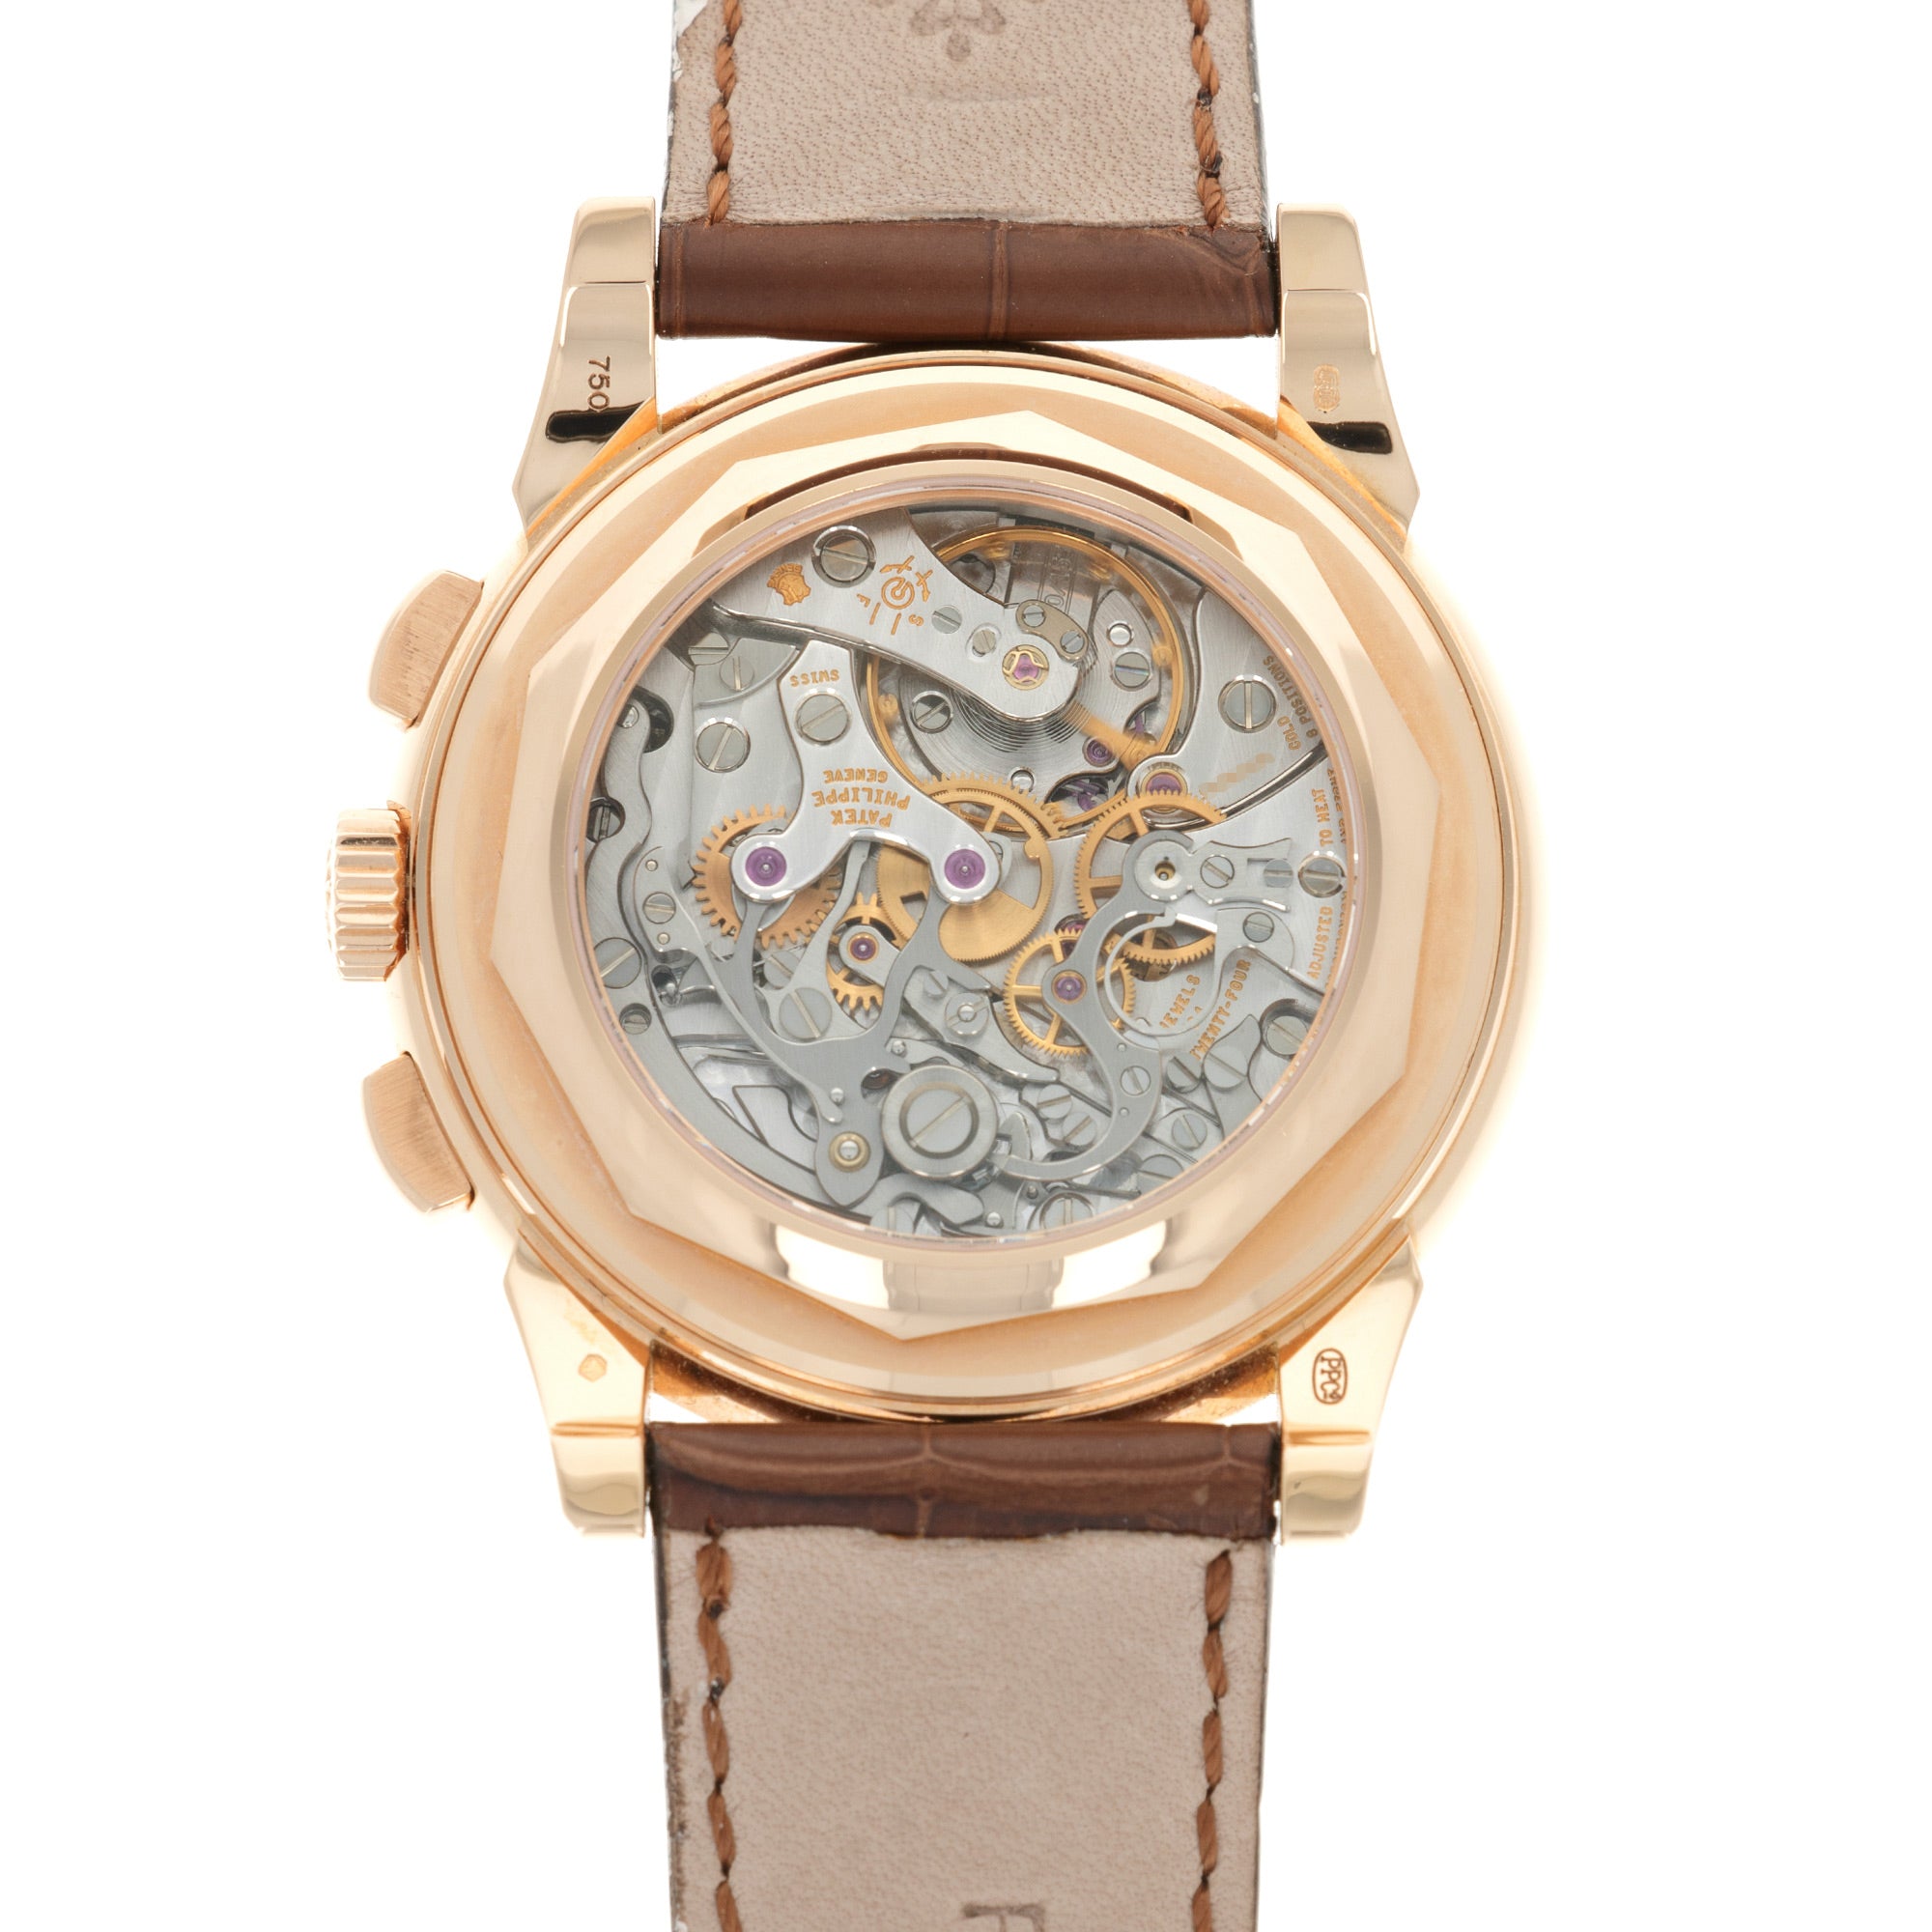 Patek Philippe - Patek Philippe Rose Gold Perpetual Calendar Watch Ref. 5970 - The Keystone Watches